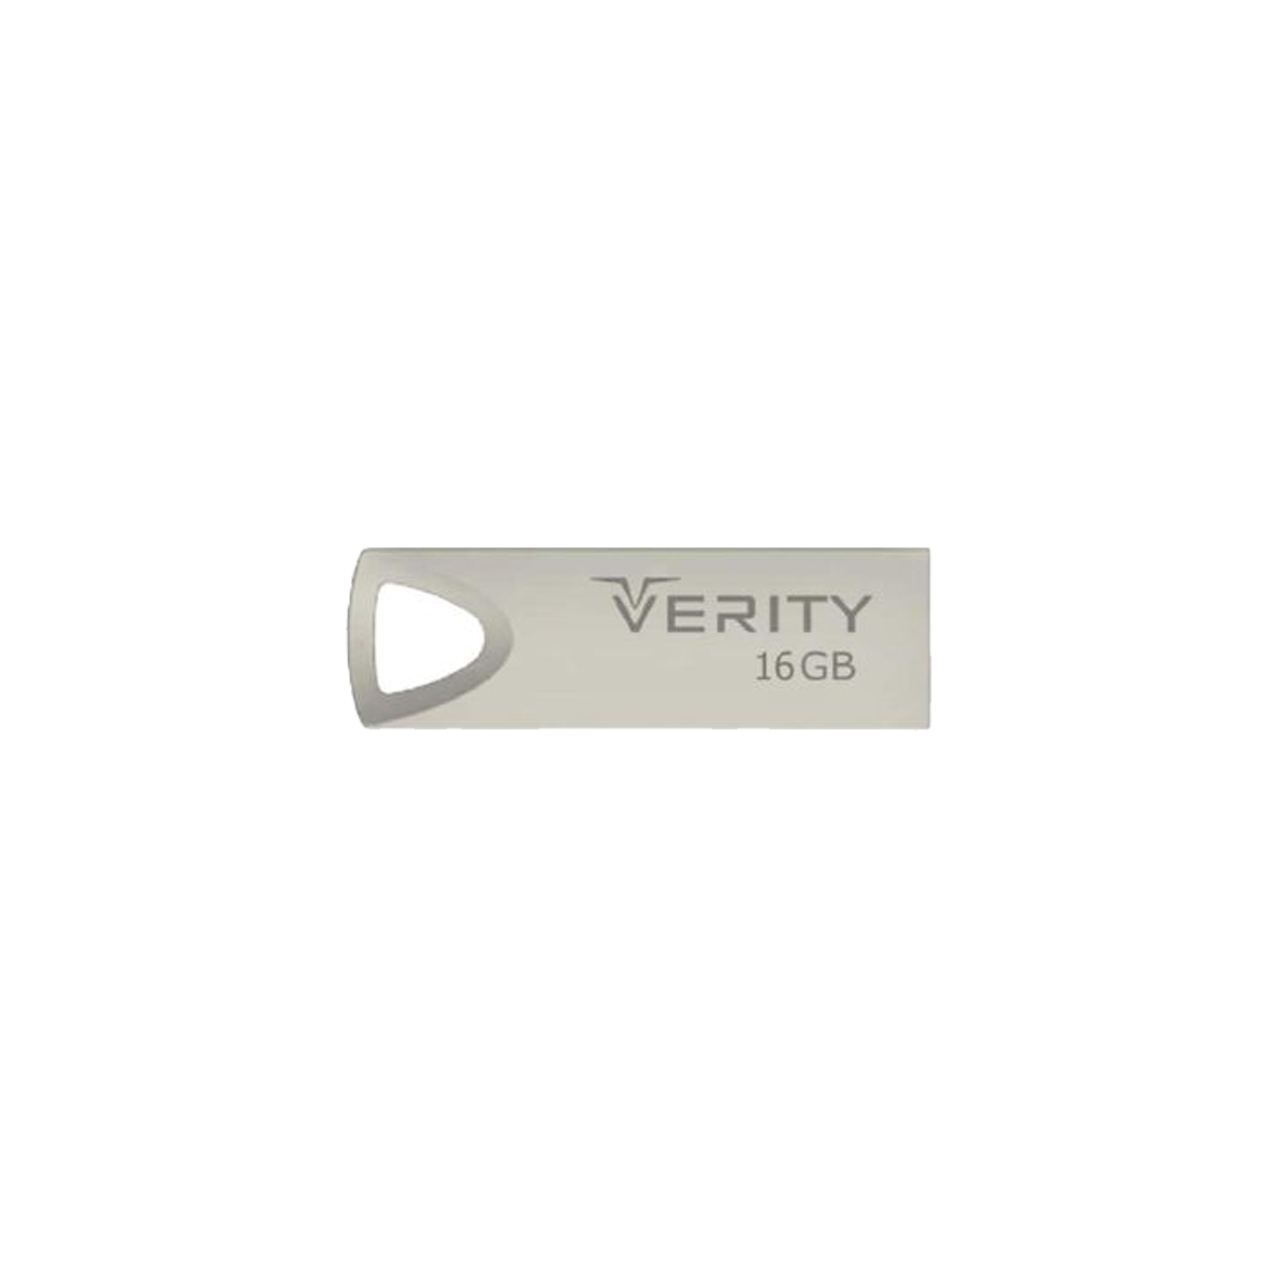 Verity V809 USB2.0 Flash Memory-16GB